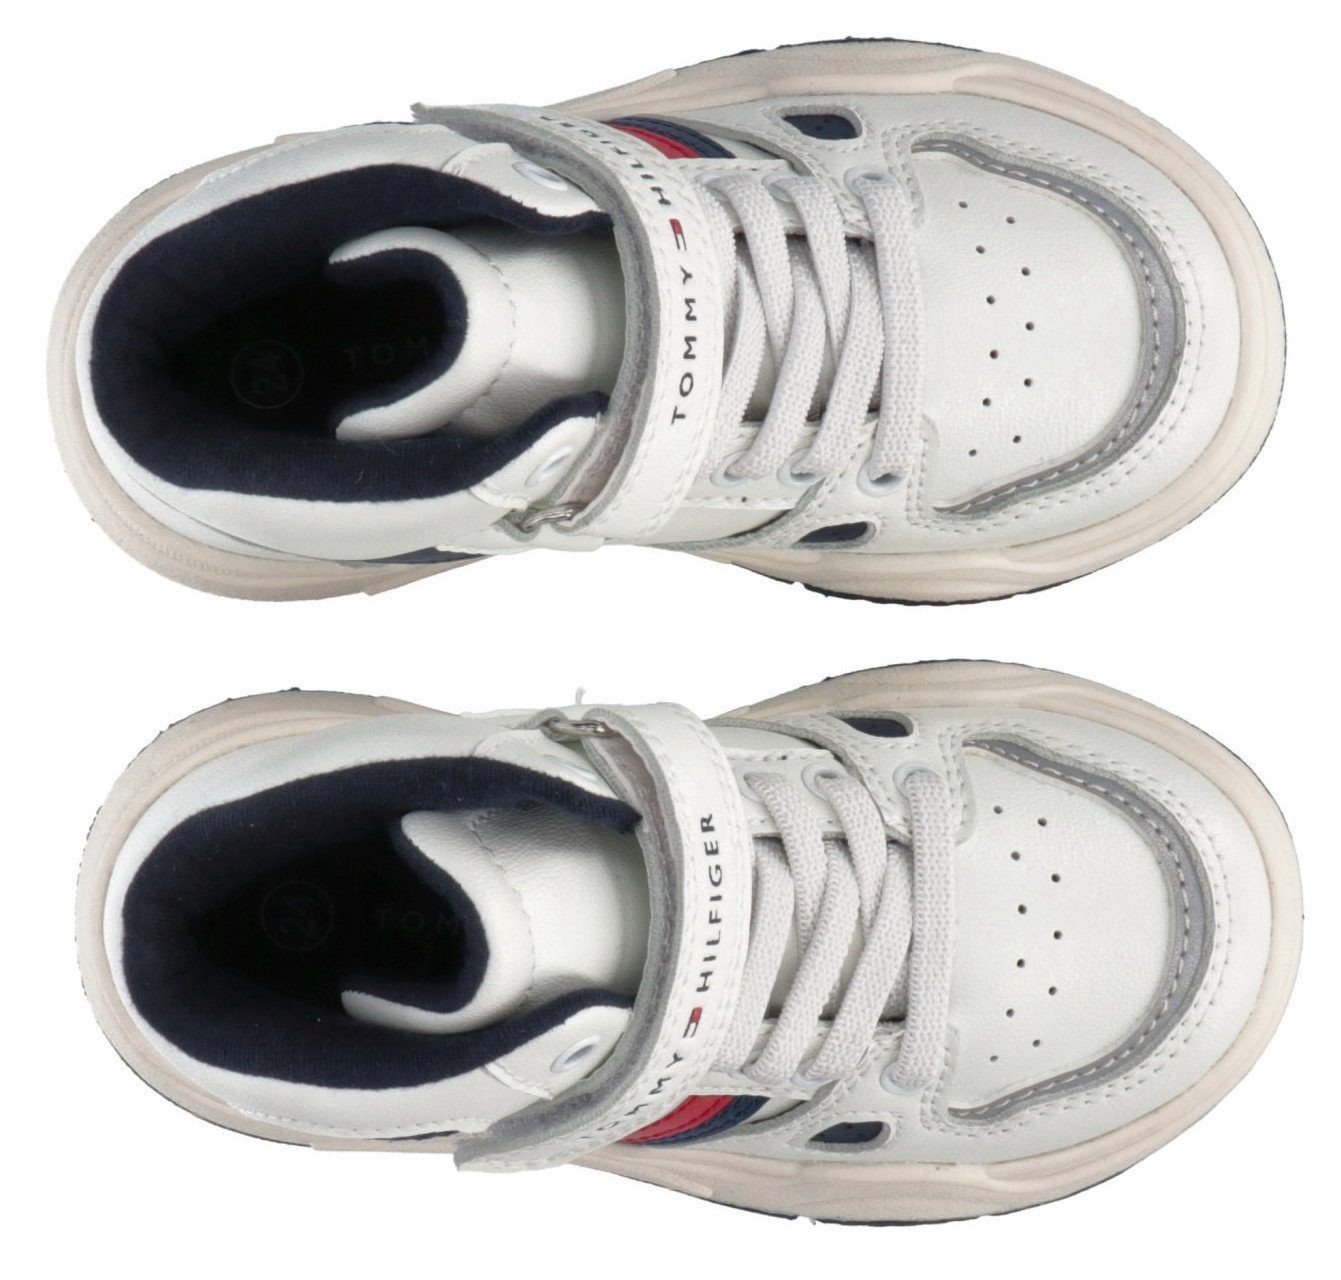 Tommy Hilfiger STRIPES HIGH cooler Sneaker in LACE-UP/VELCRO Farbkombi SNEAKER TOP